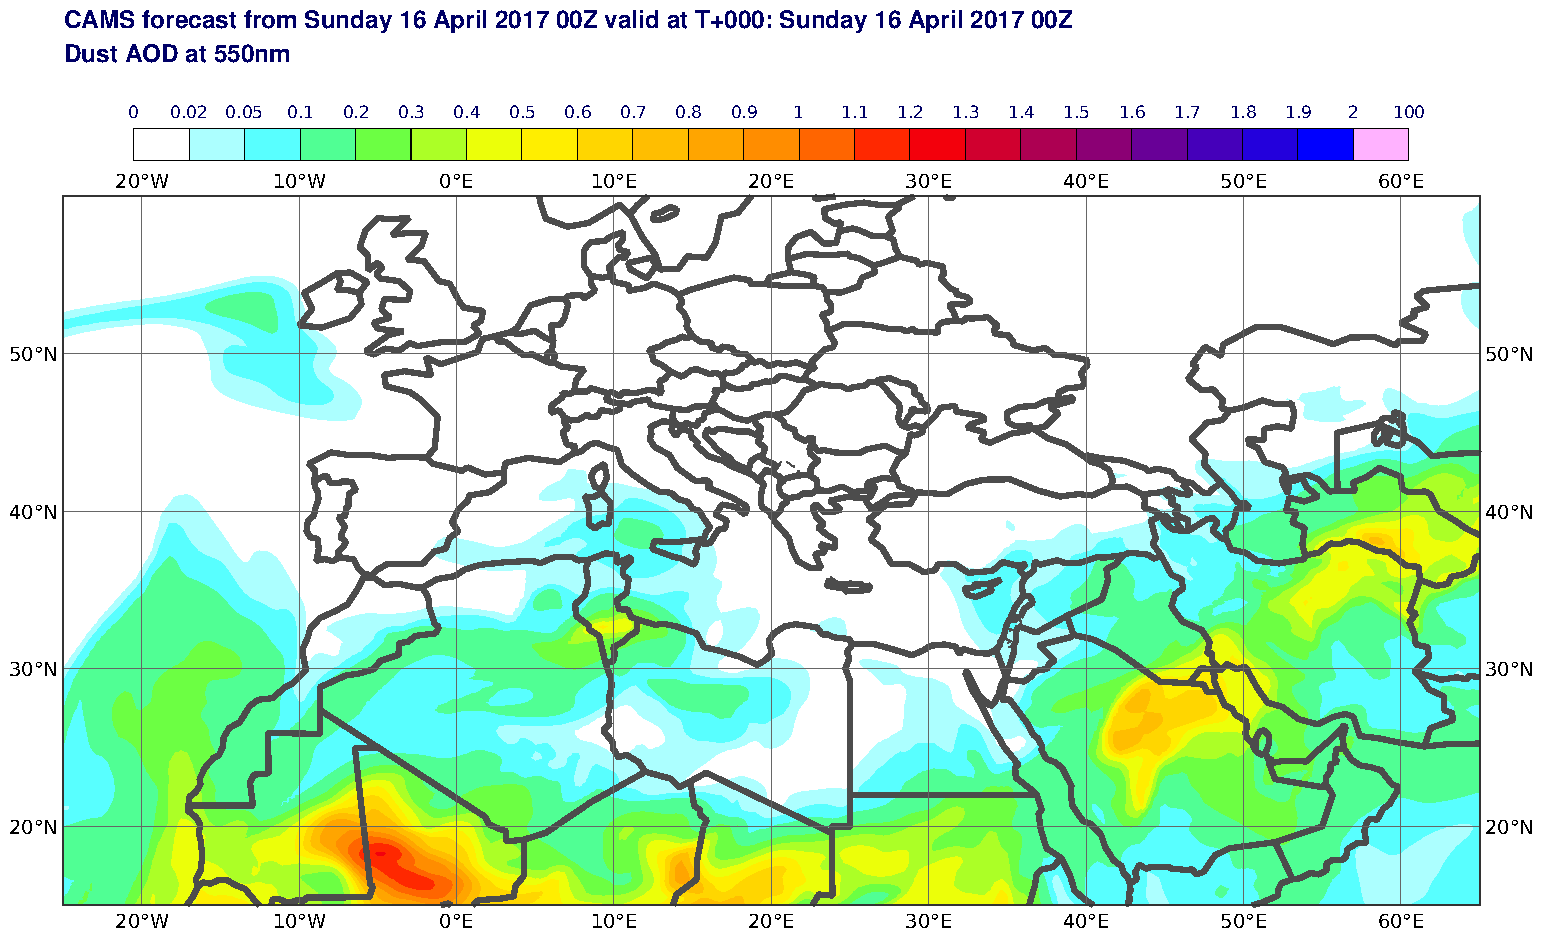 Dust AOD at 550nm valid at T0 - 2017-04-16 00:00